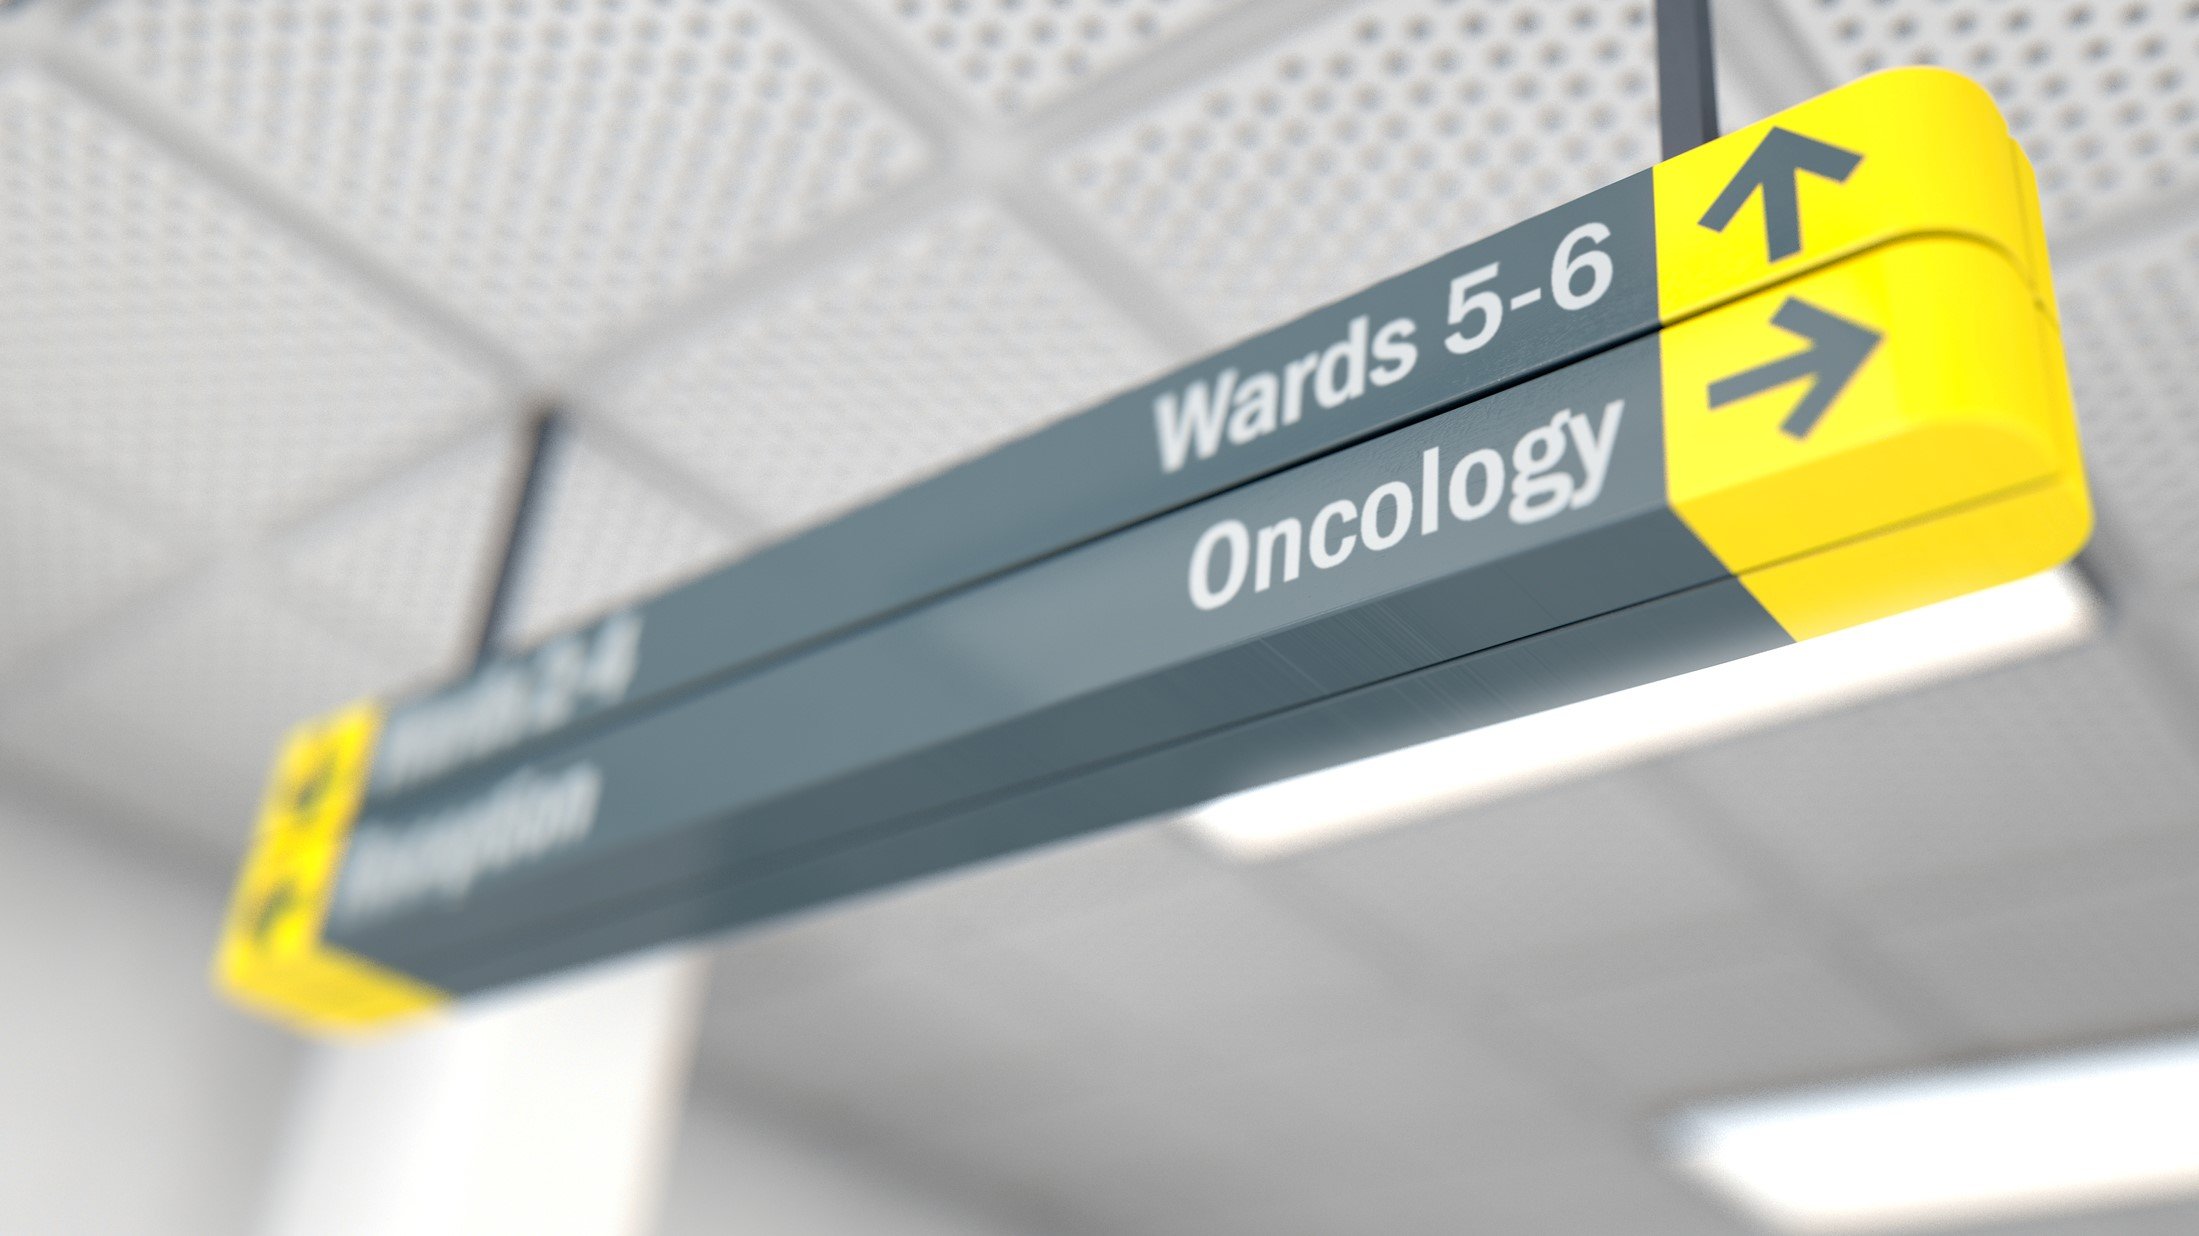 oncology ward sign cancer hospital